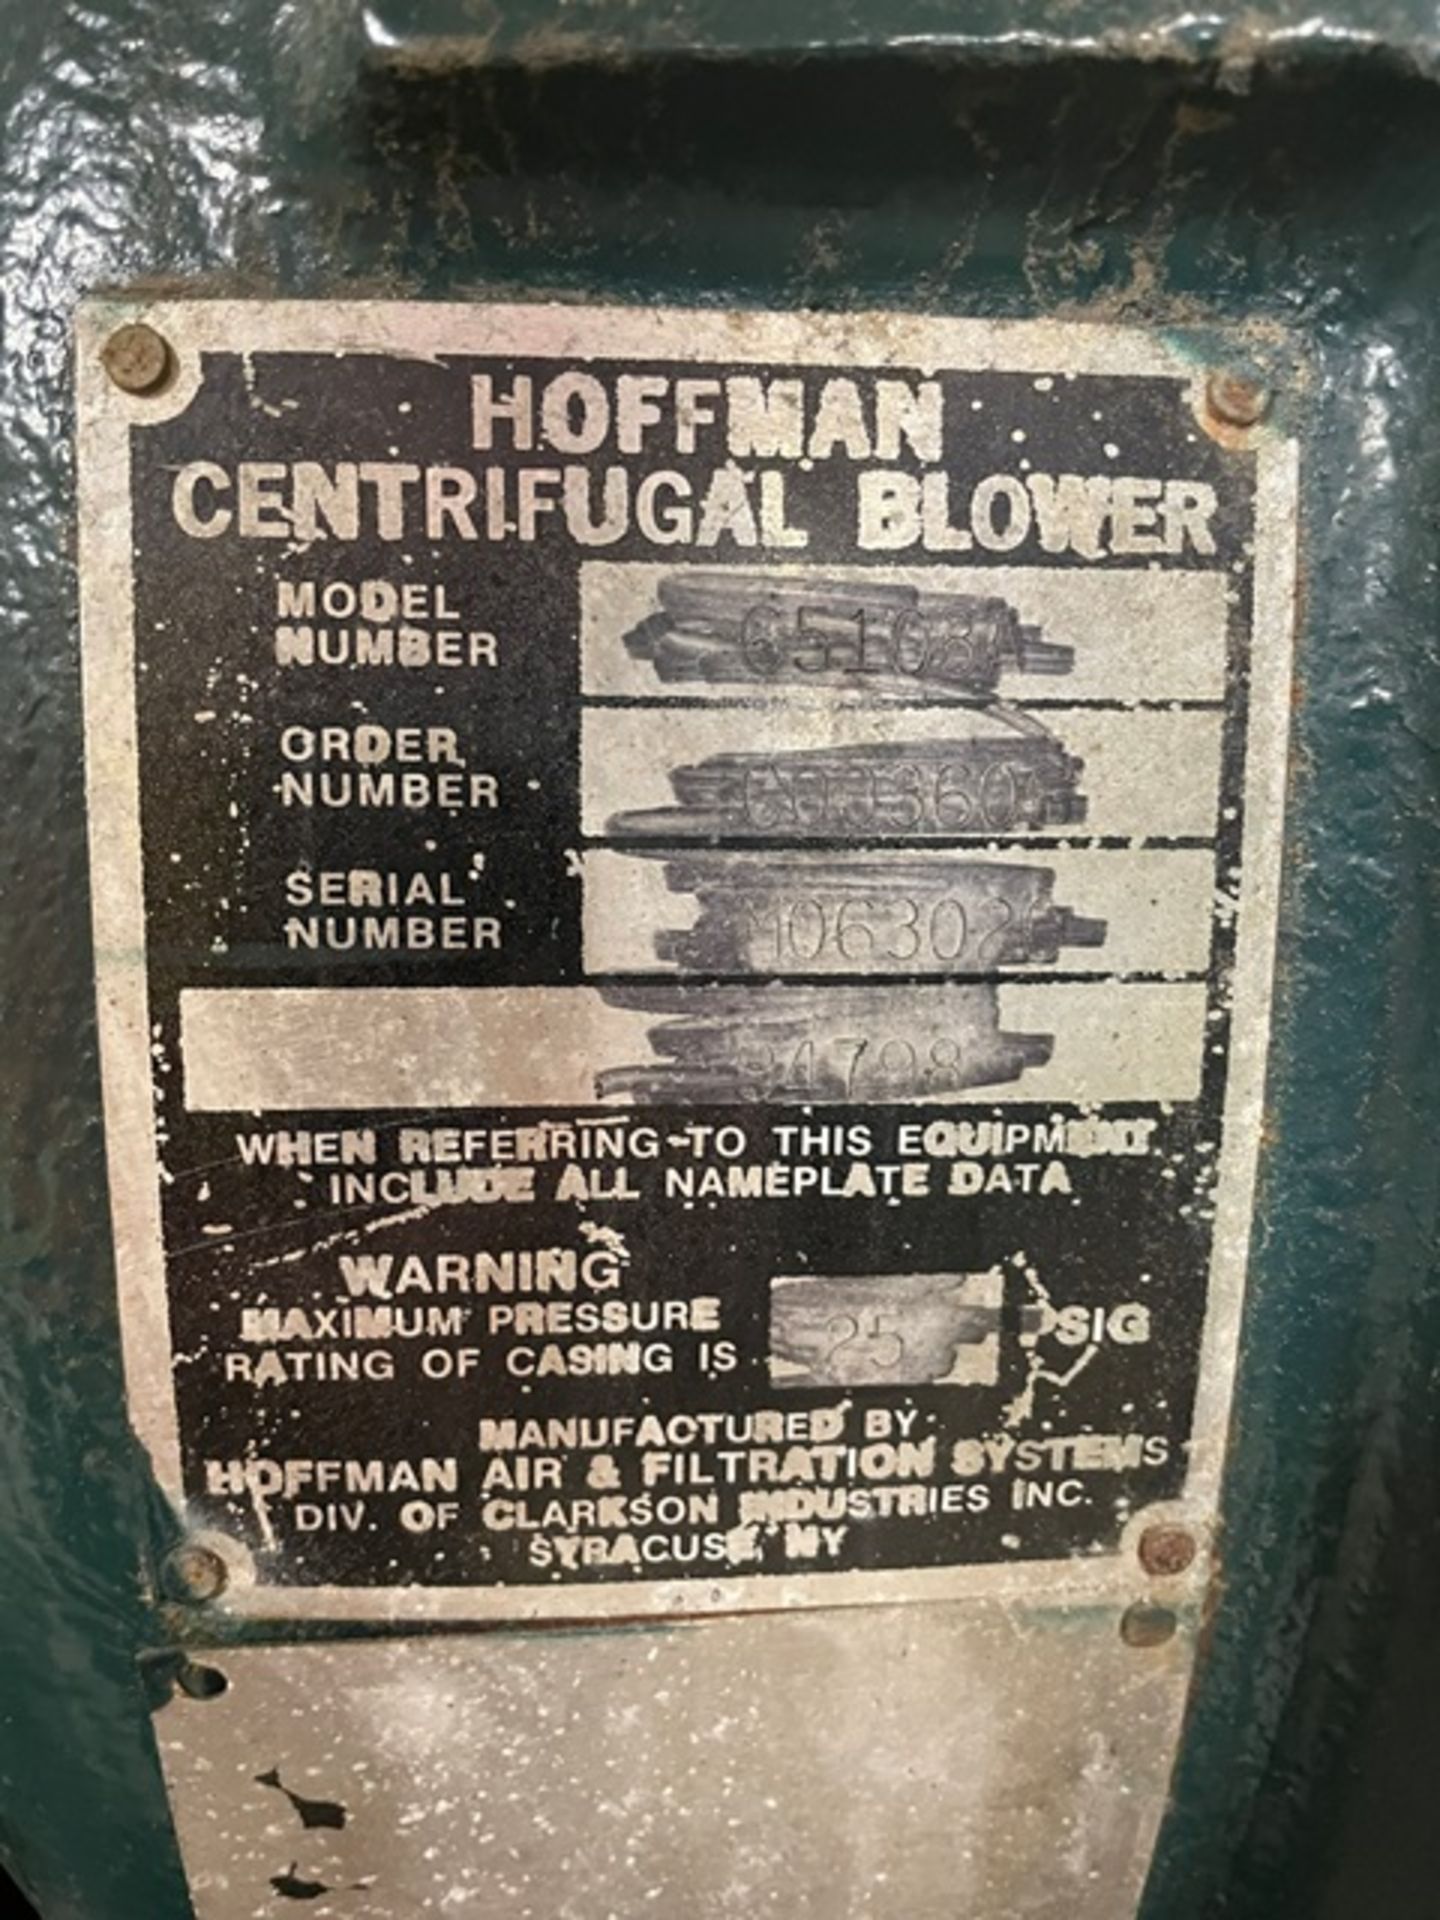 2019 Hoffman Model 65108A Centrifugal Blower w/Baldor 200 HP Motor - Image 3 of 4